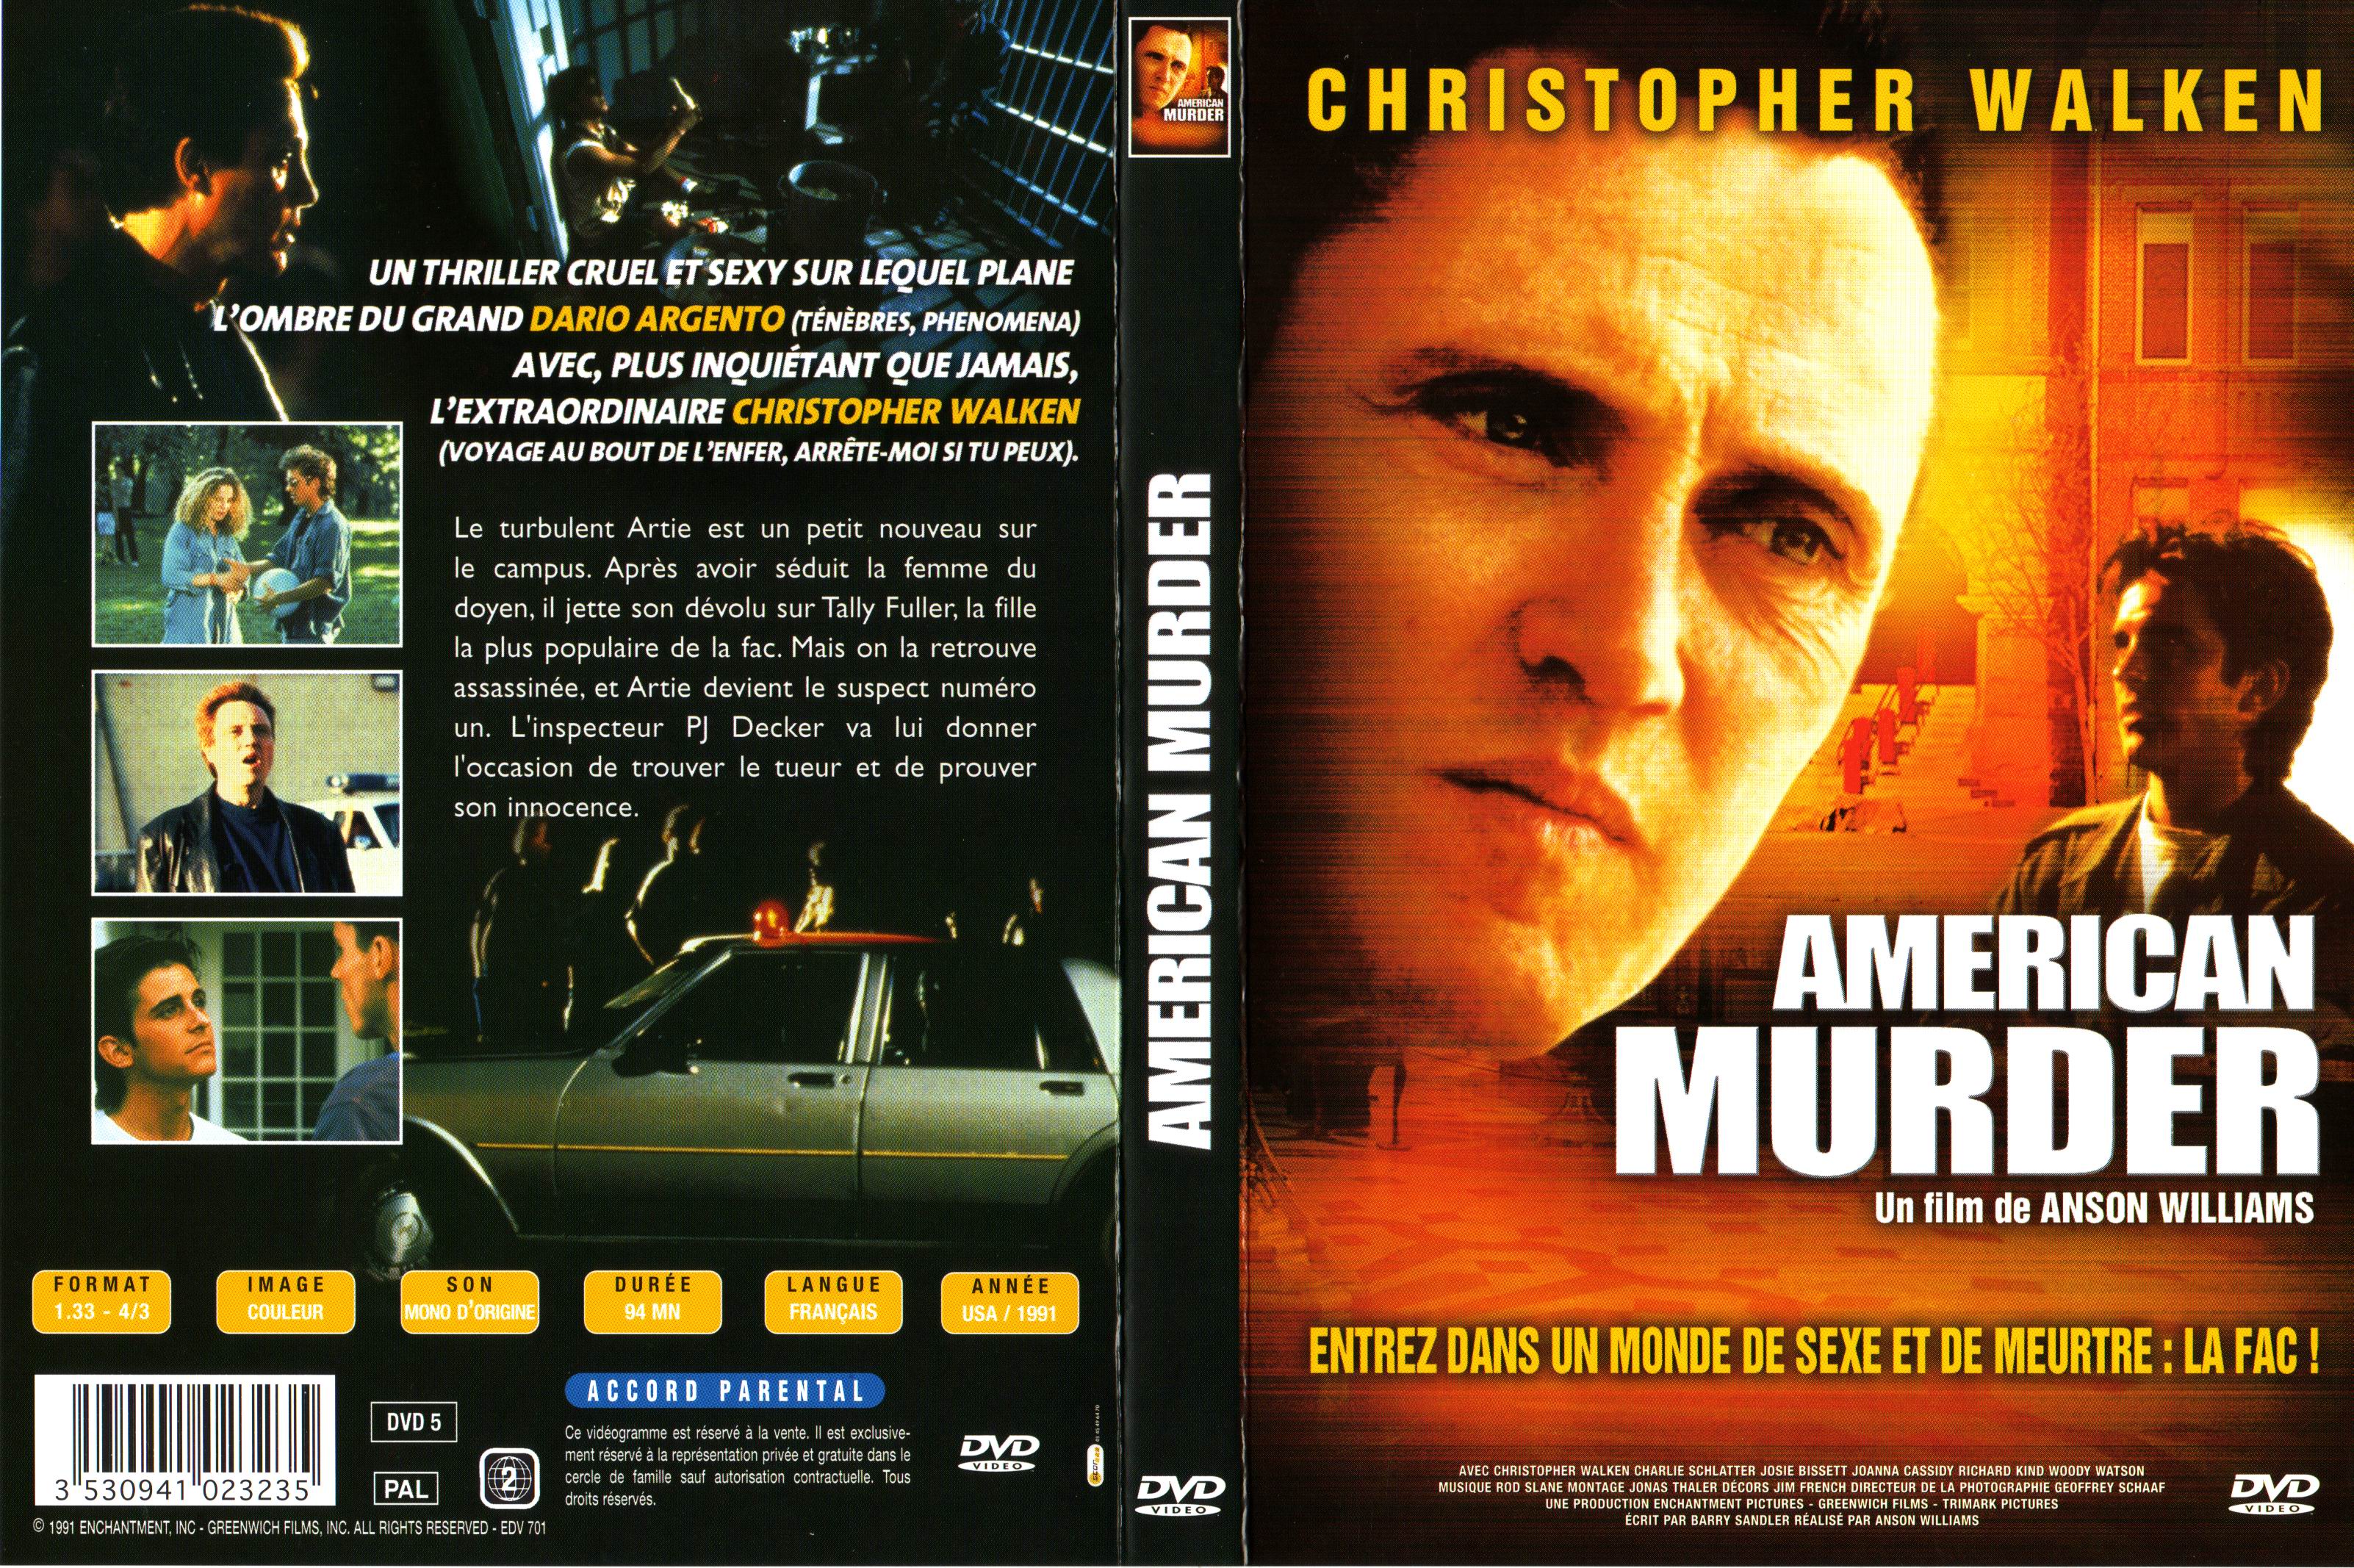 Jaquette DVD American murder